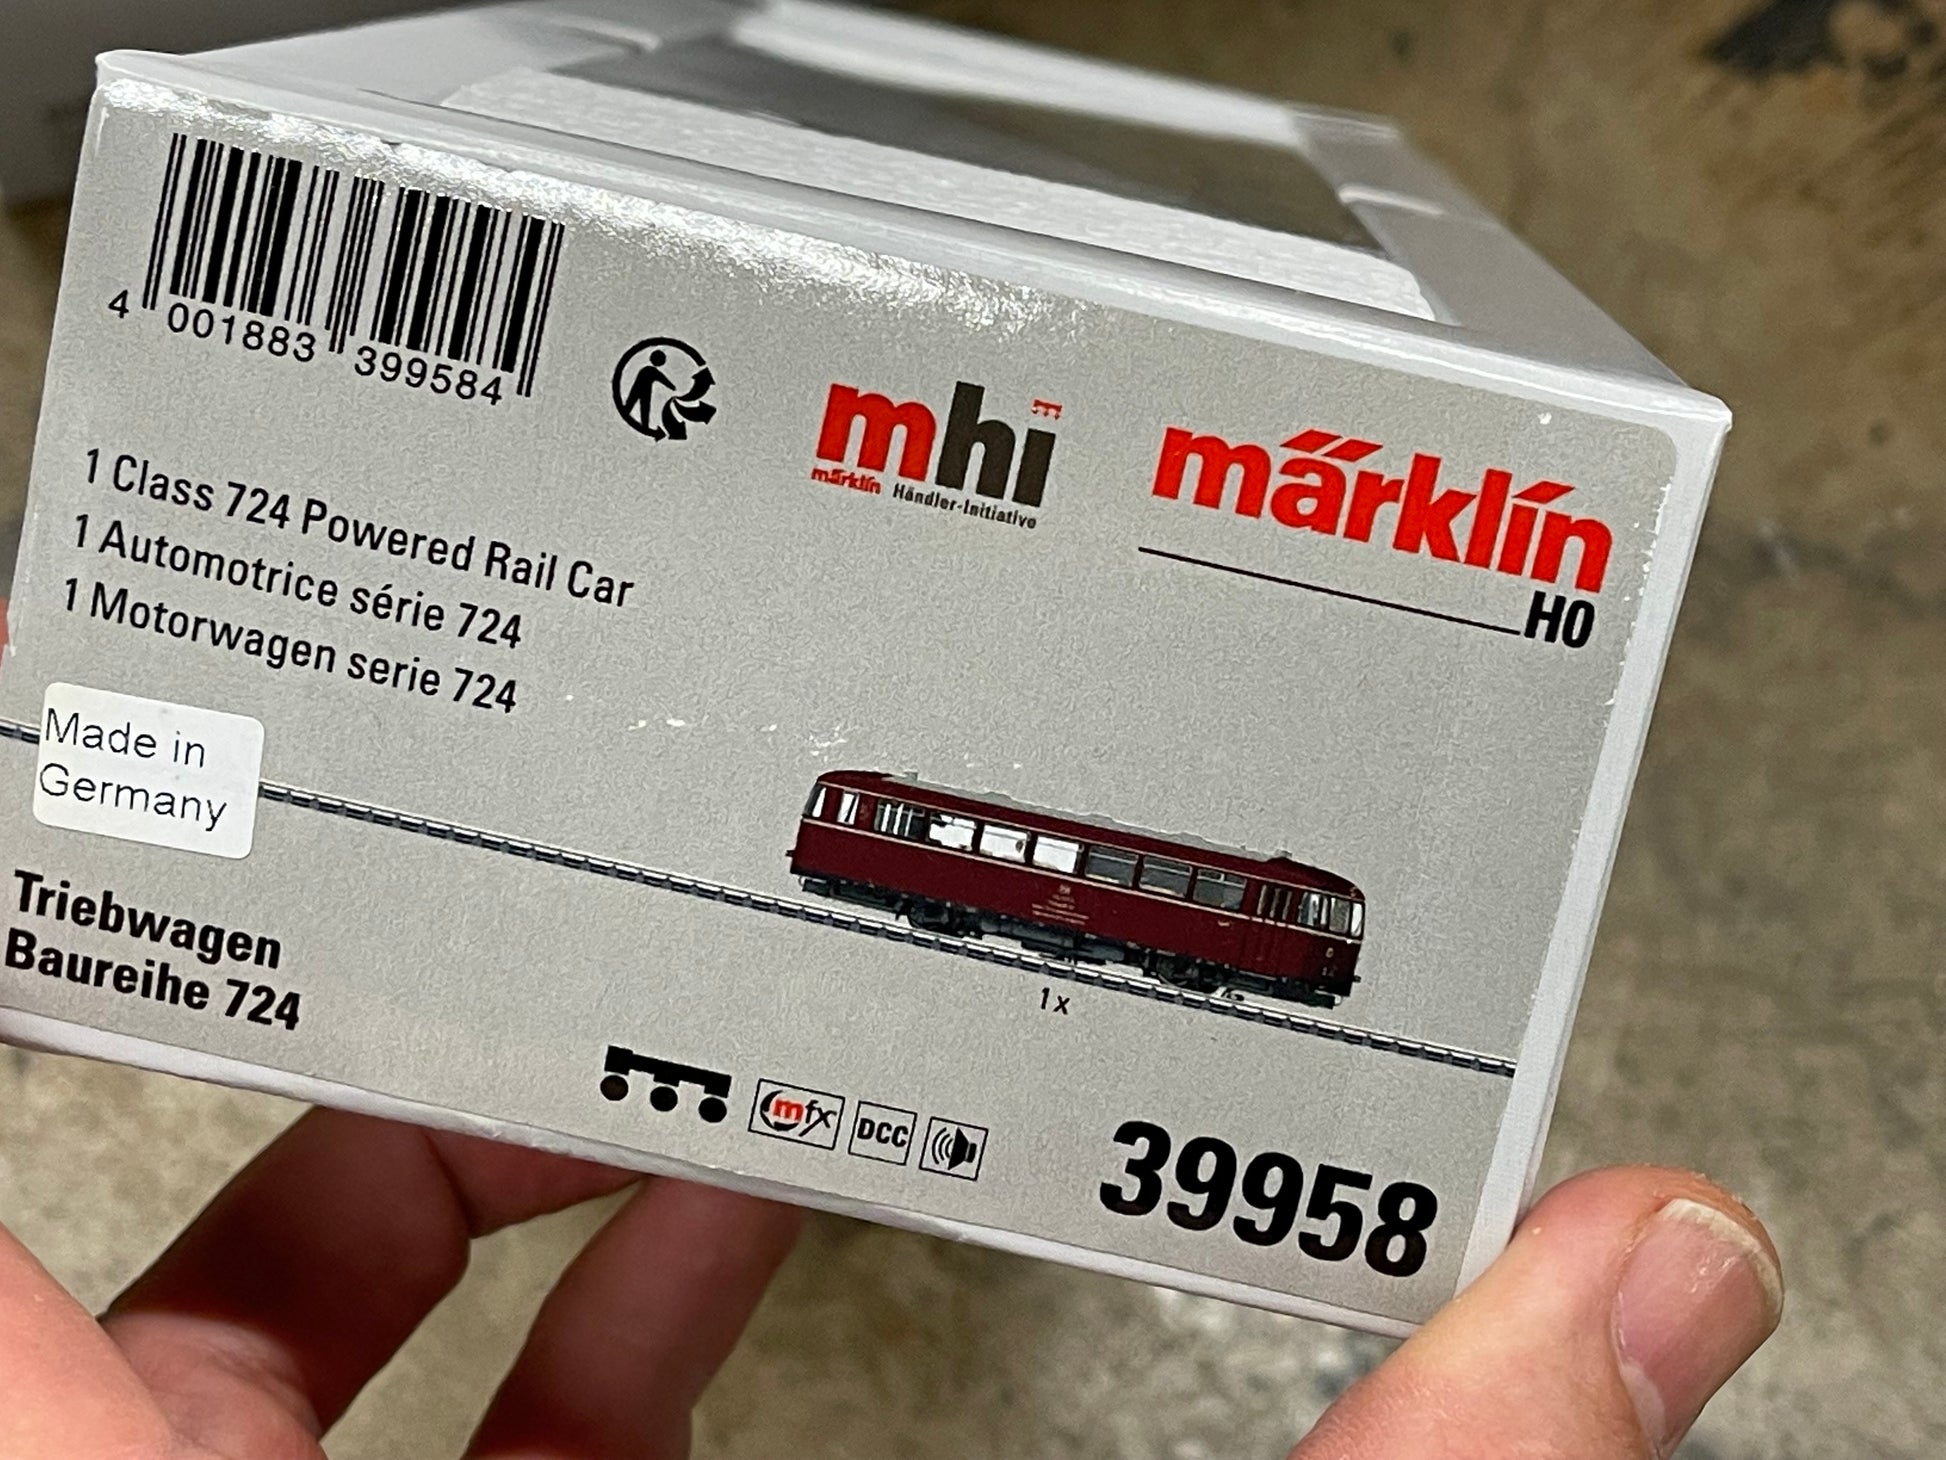 Marklin 39958 - Class 724 Powered Rail Car at Ajckids.com